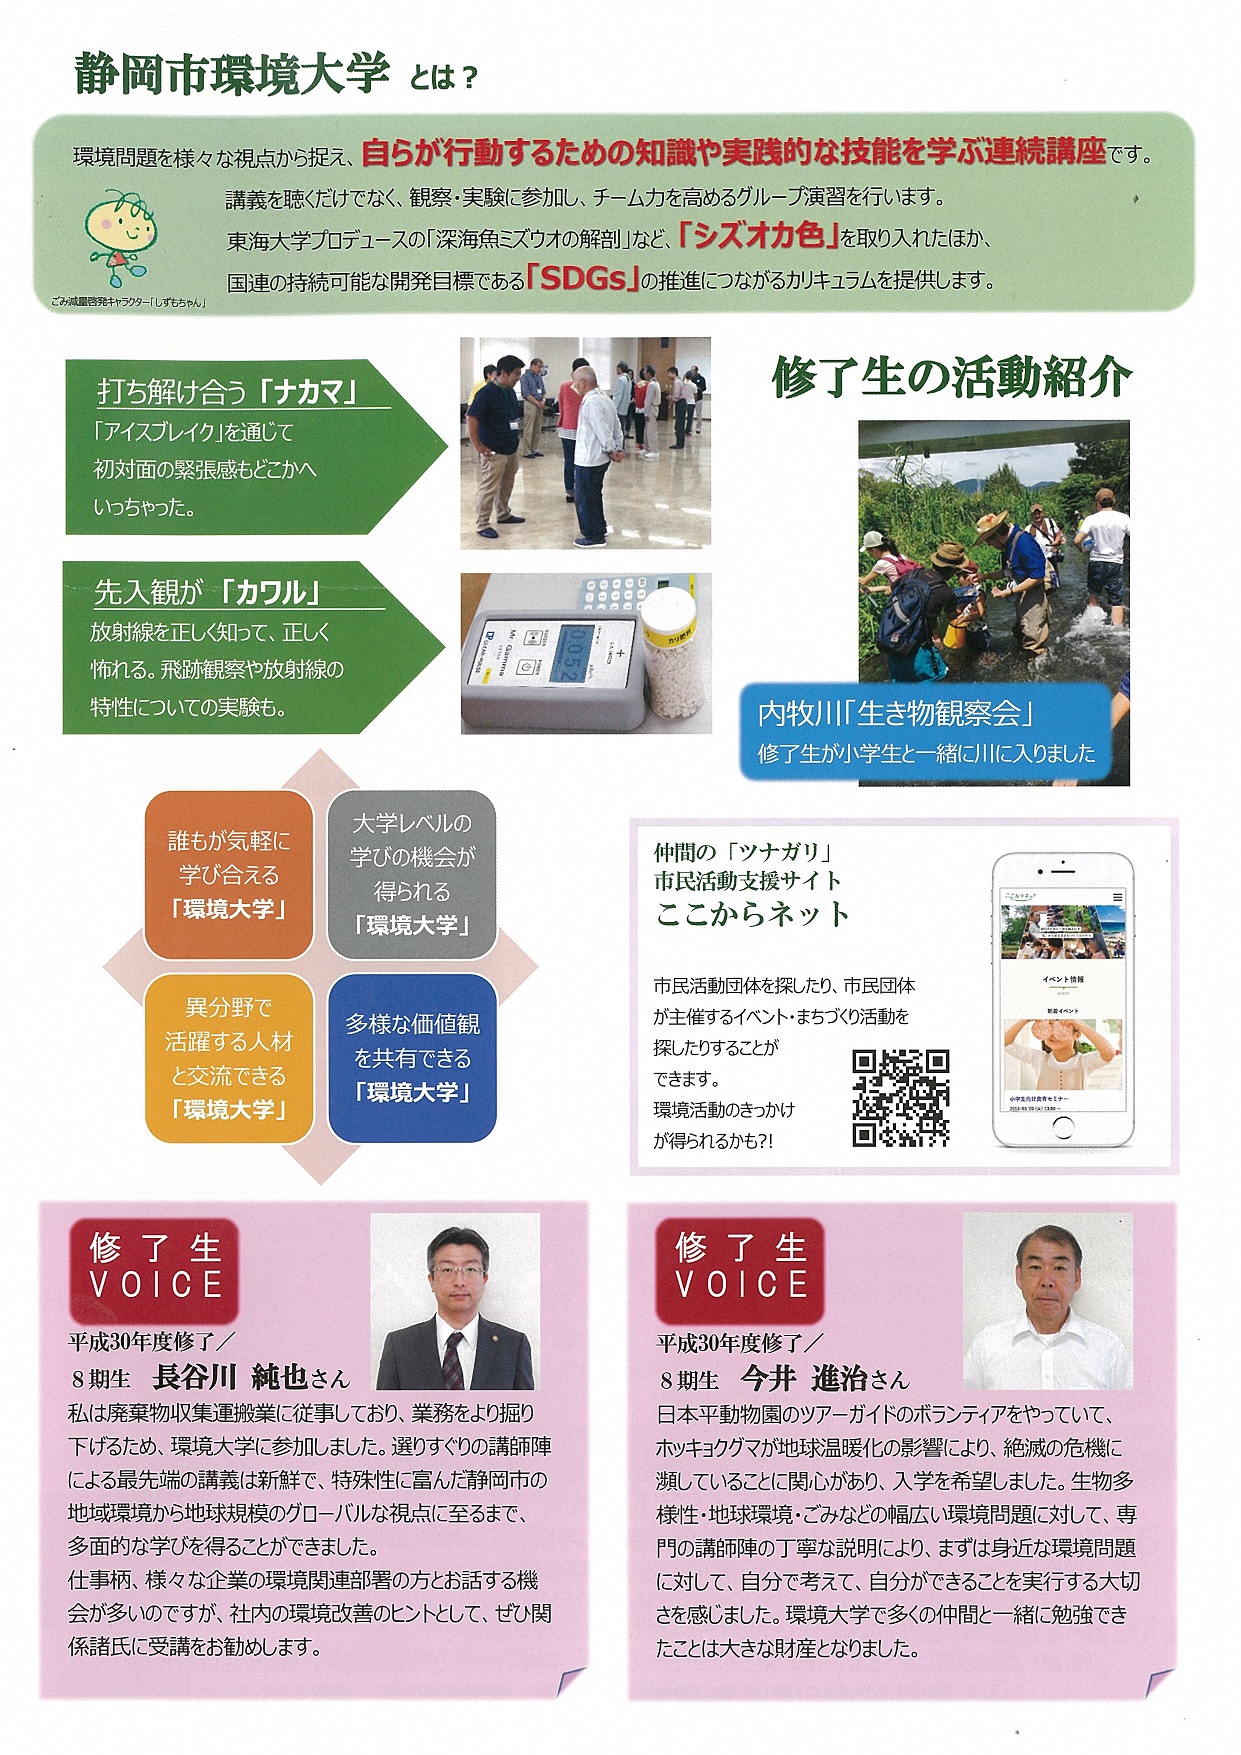 https://www.shizutan.jp/learning/2019/04/18/images/%E7%92%B0%E5%A2%83%E5%A4%A7%E5%AD%A6H31-2.jpg